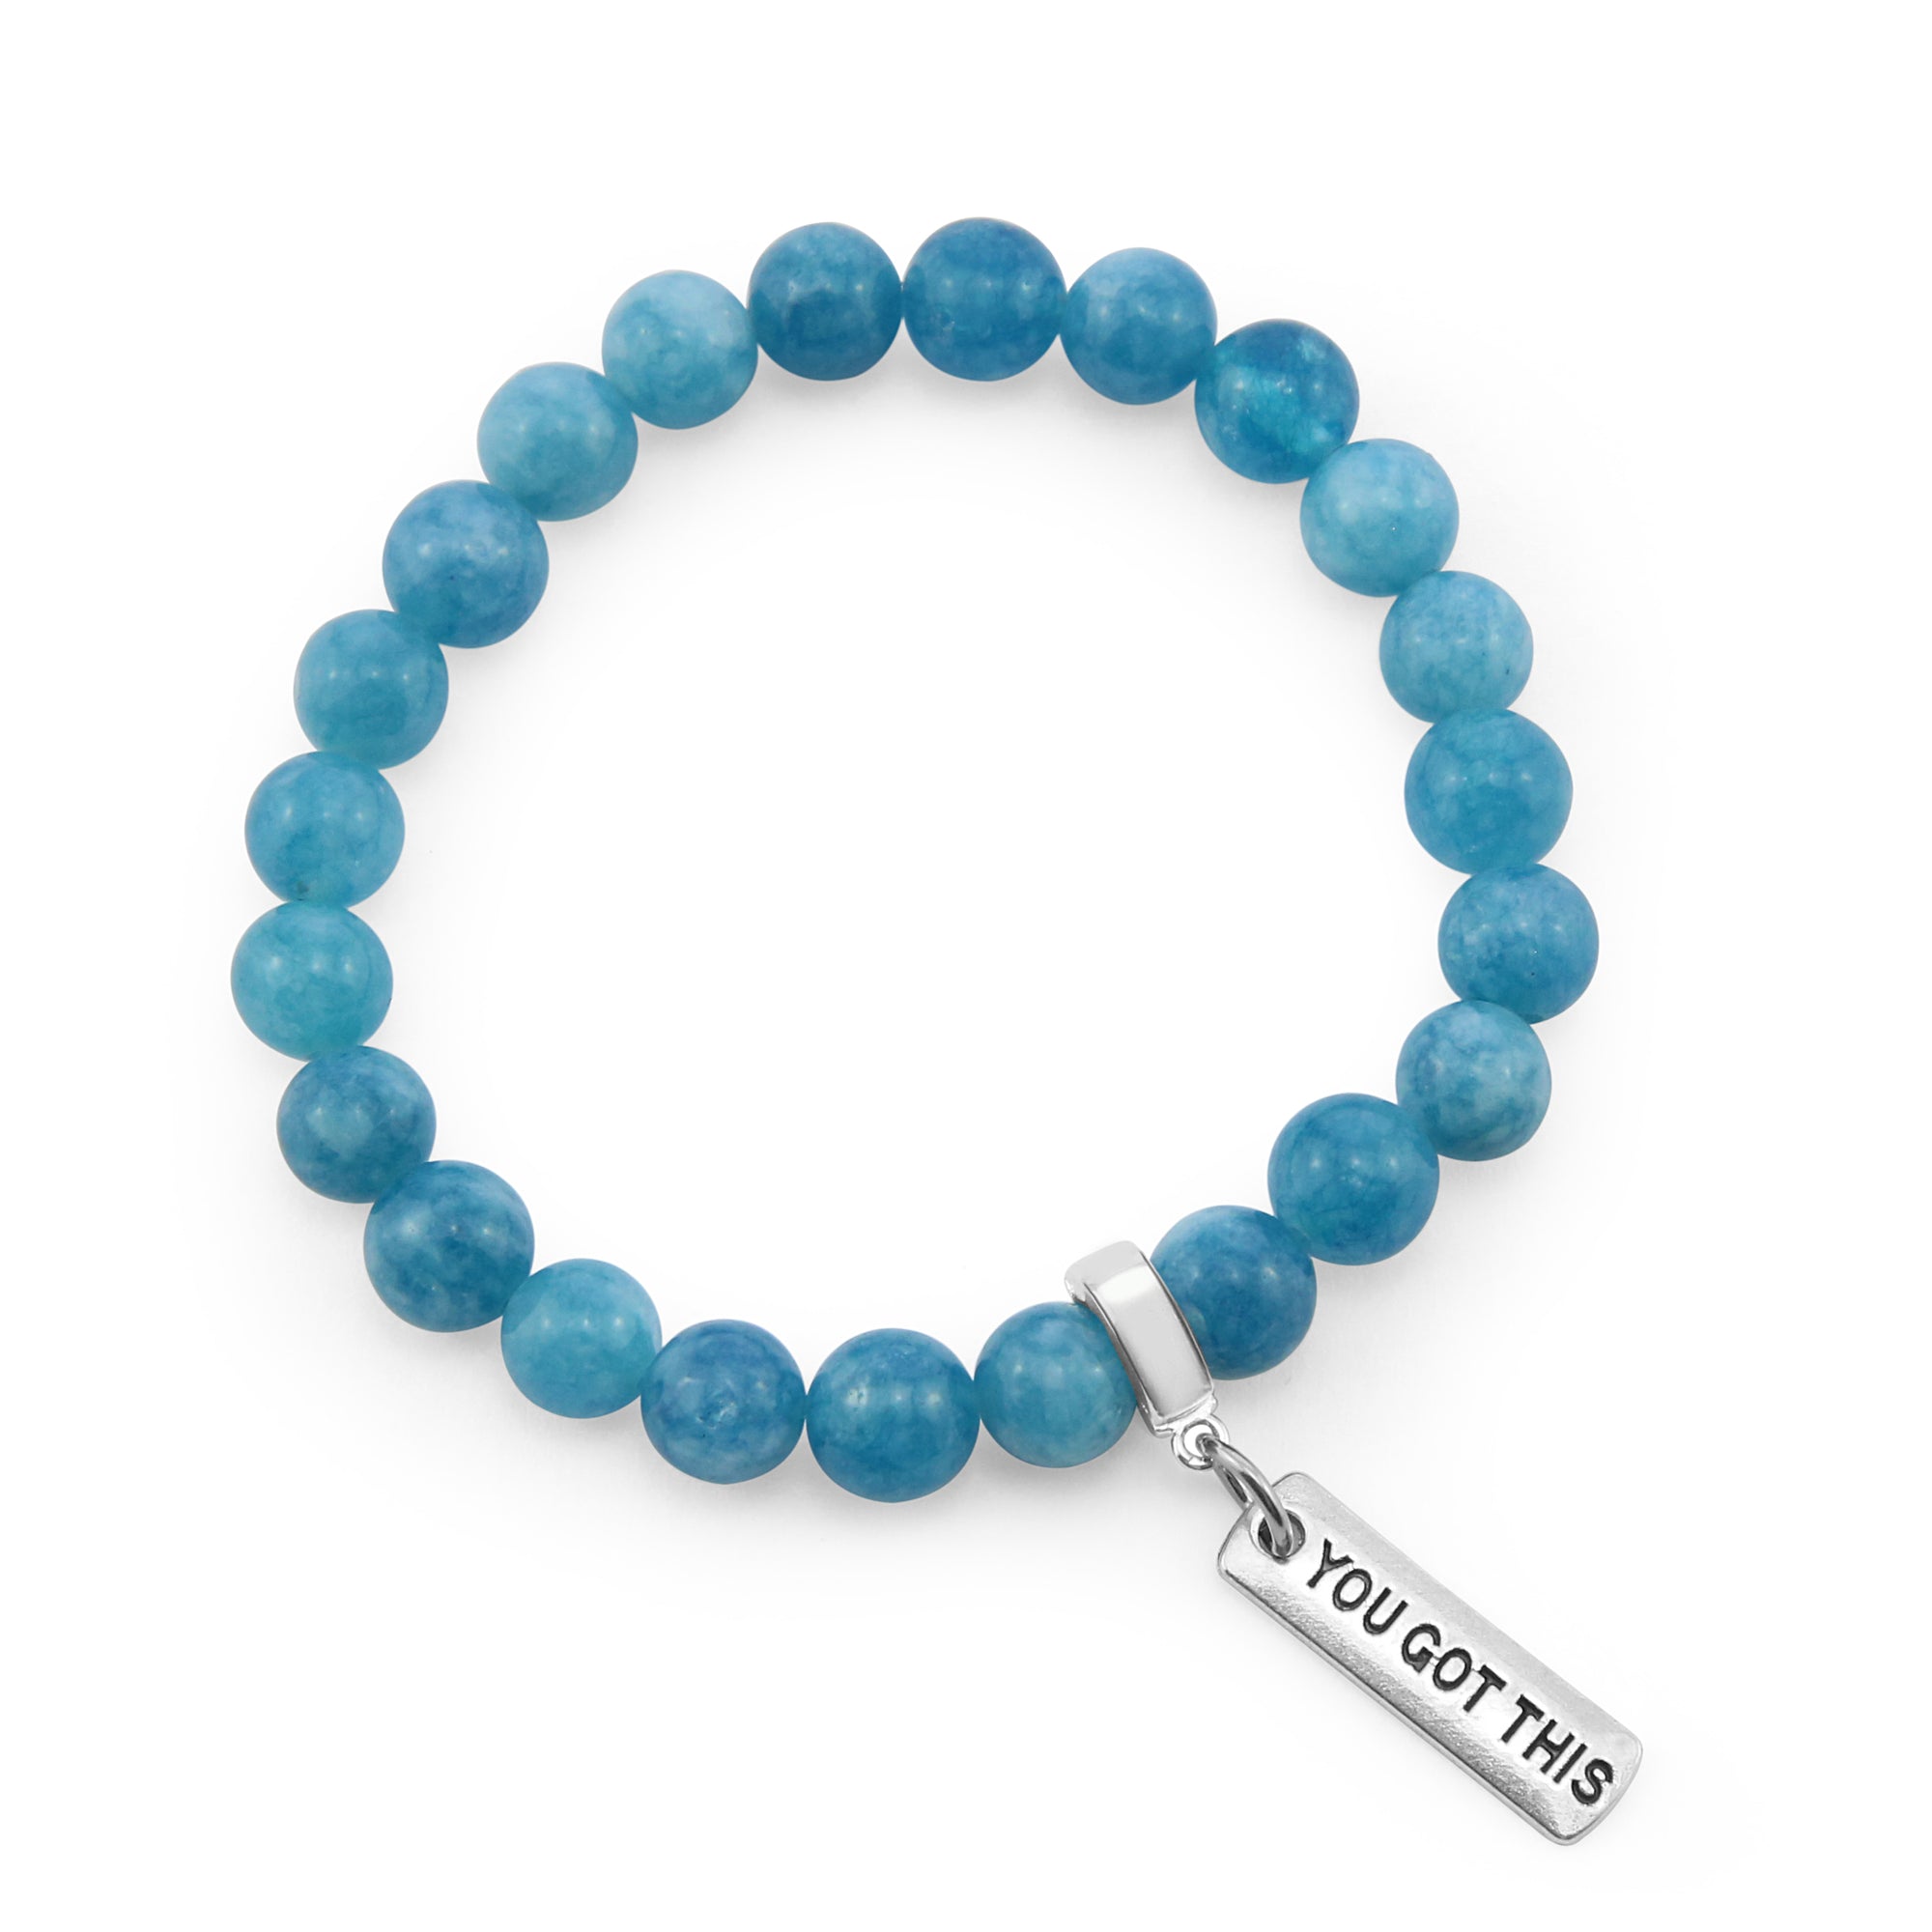 Stone Bracelet - Oceana Wash - 8mm Beads with Word Charm